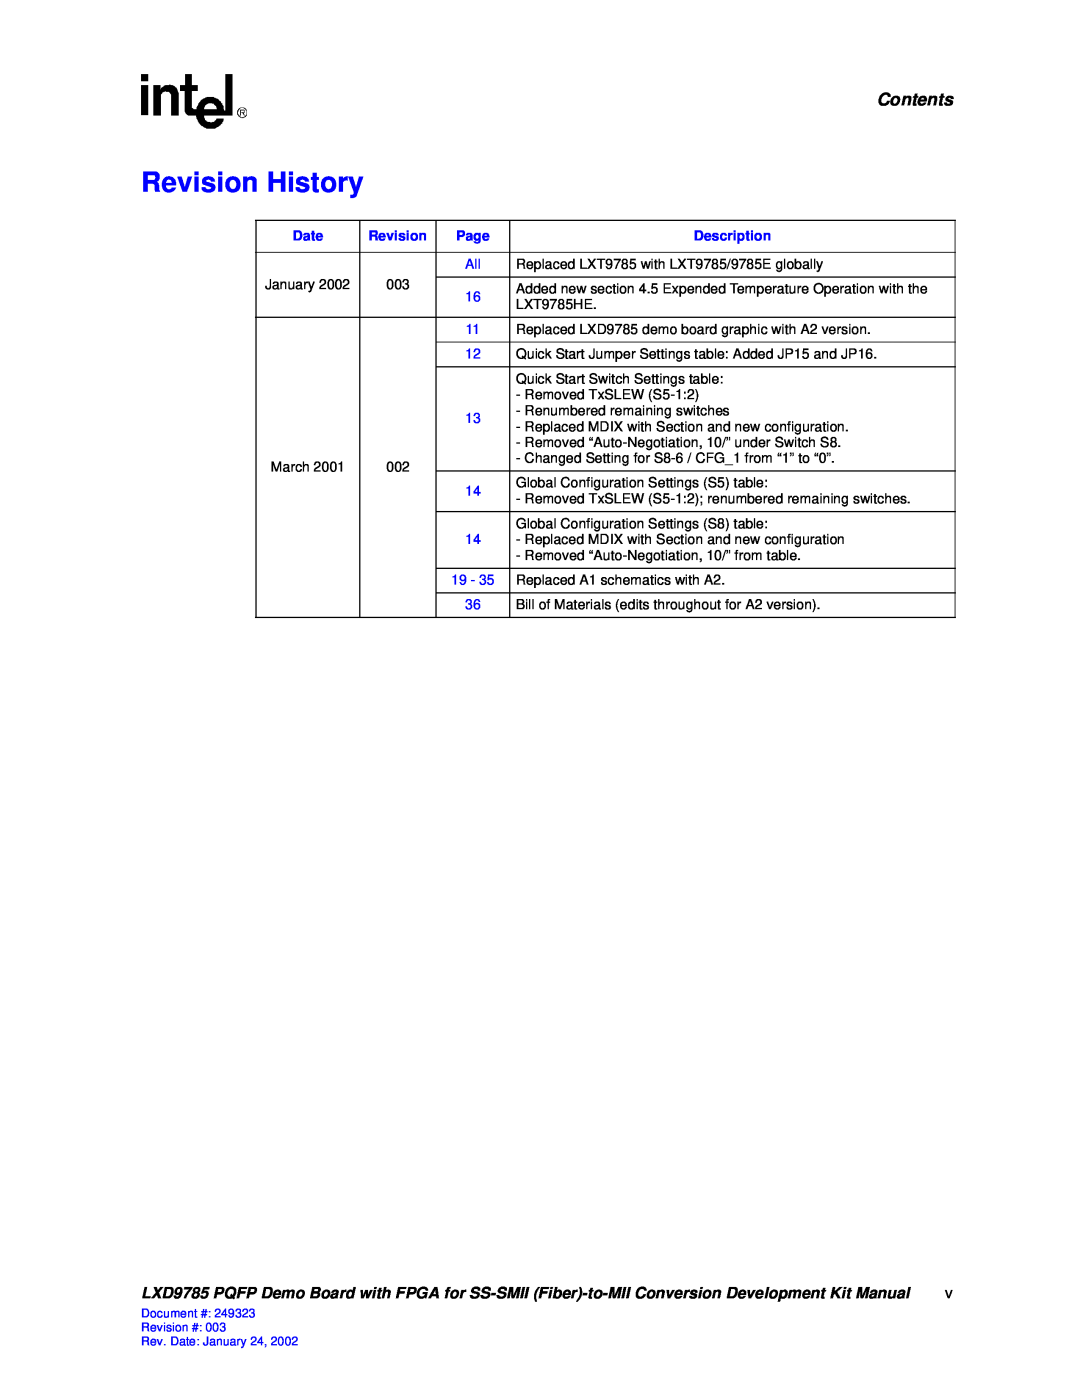 Intel Demo Board with FPGA for SS-SMII (Fiber)-to-MII Conversion manual Revision History, Contents, Date, Page, Description 